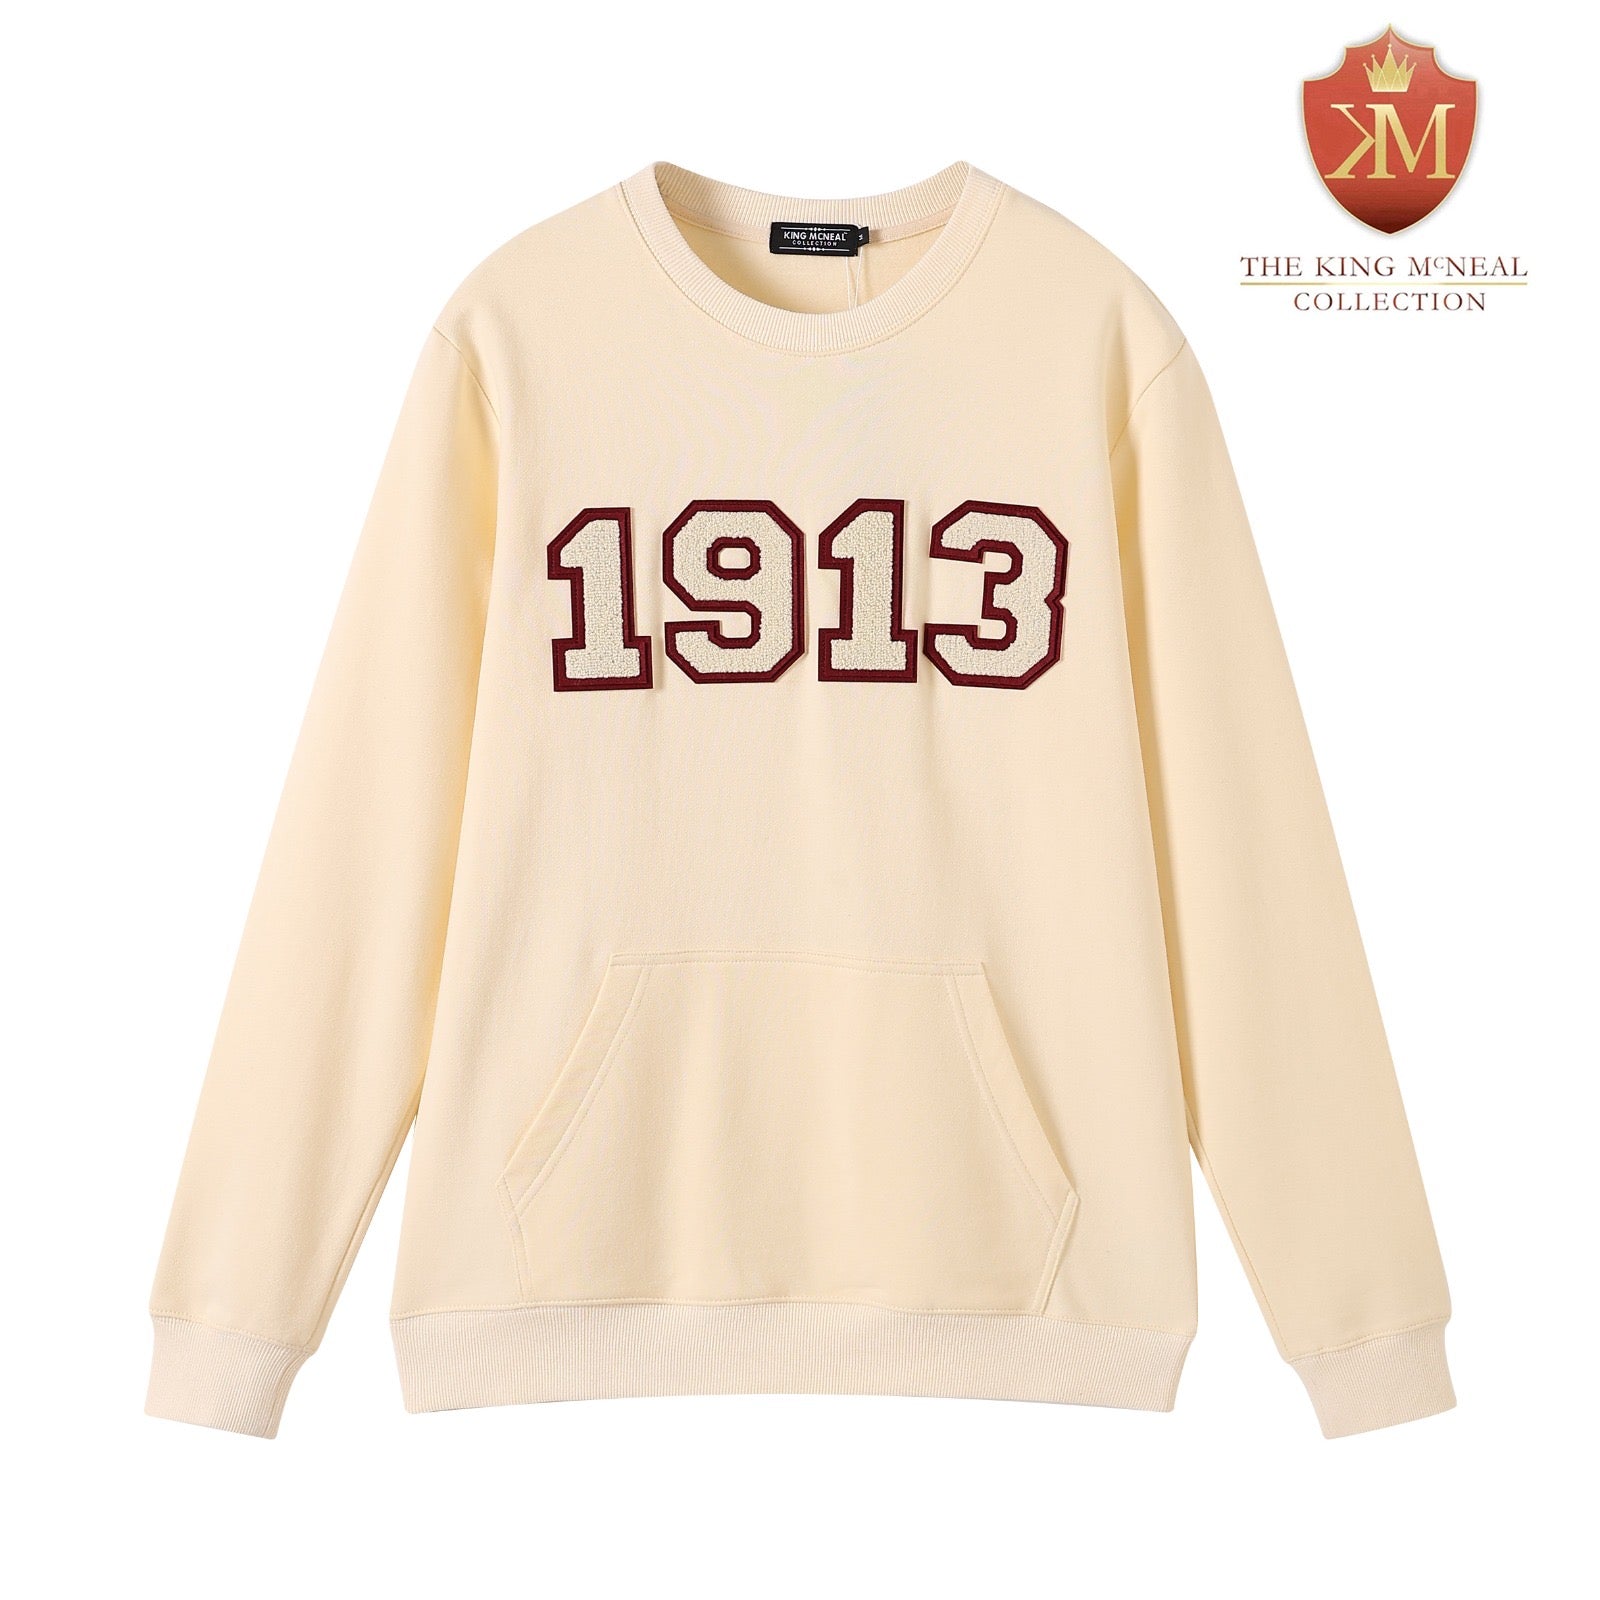 DST 1913 Crimson & Cream Crest Pocket Chenille Crewneck